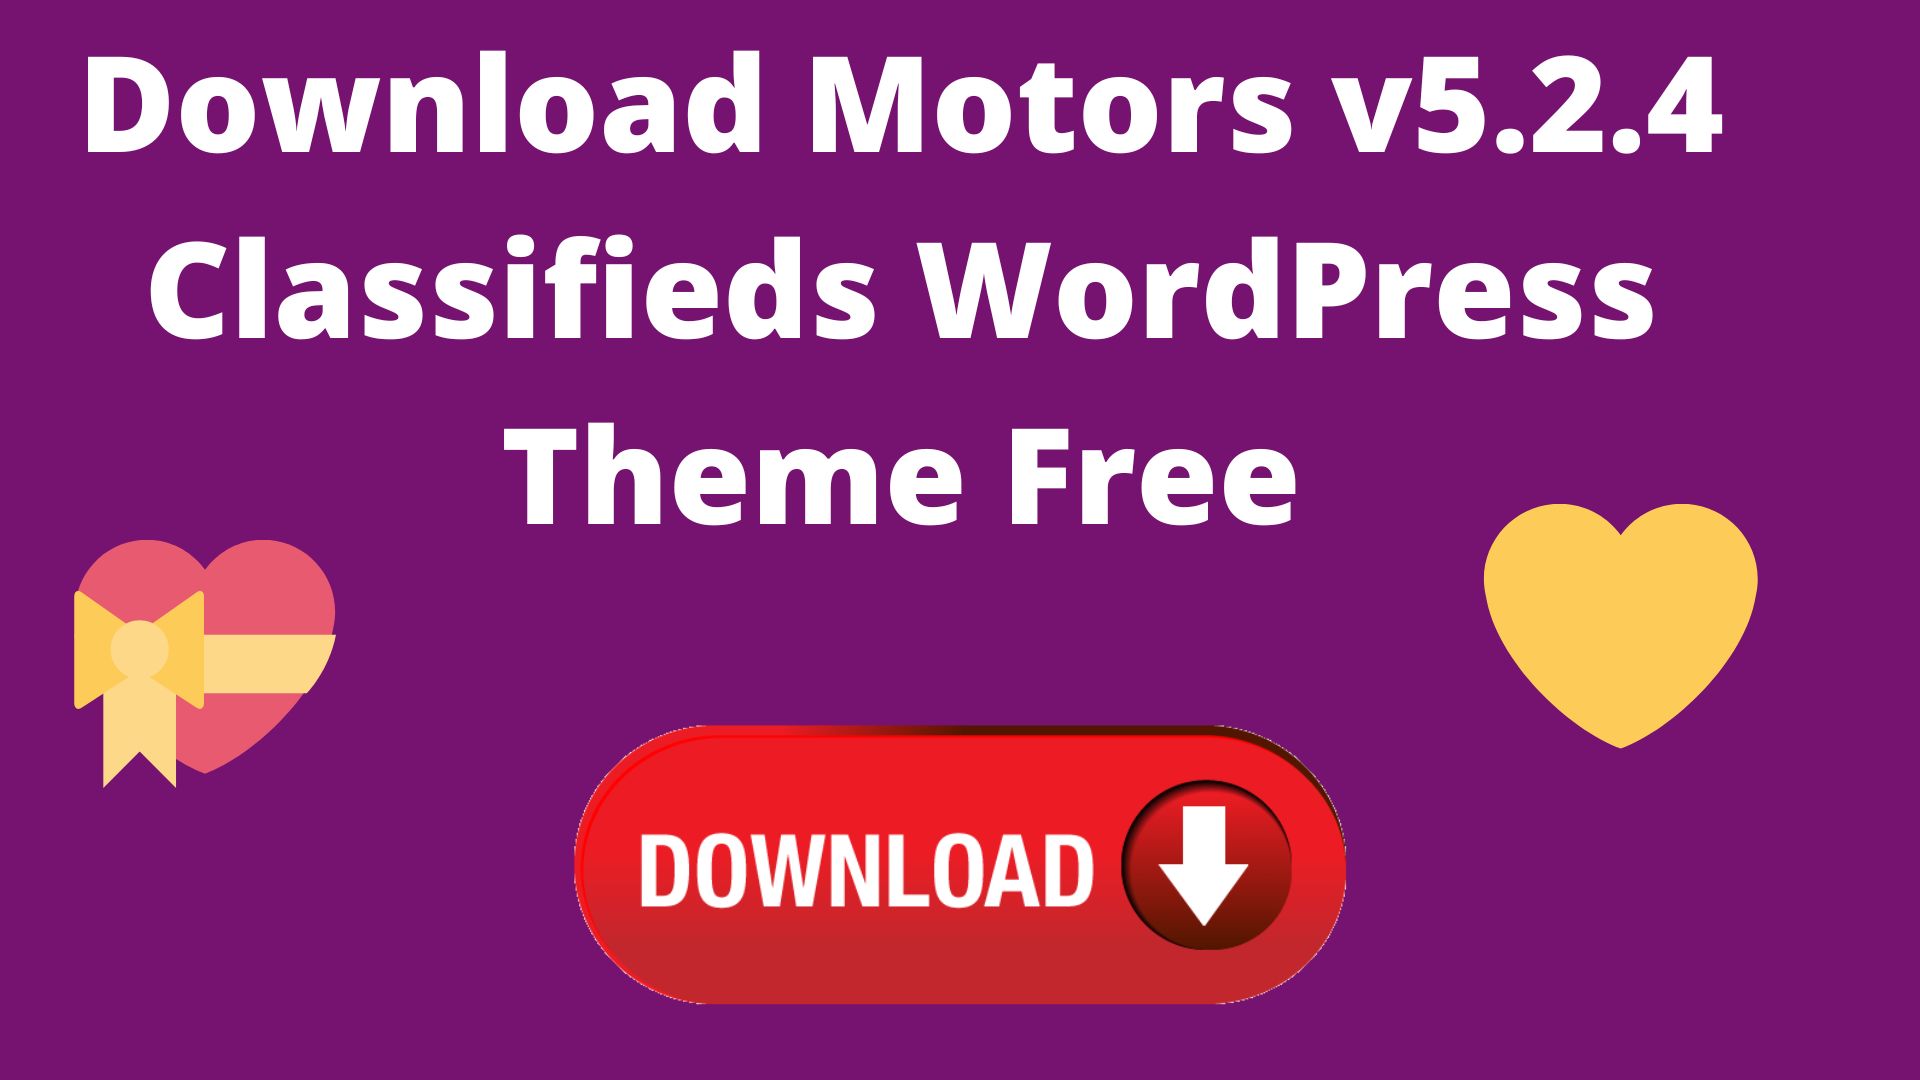 Download motors v5. 2. 4 classifieds wordpress theme free